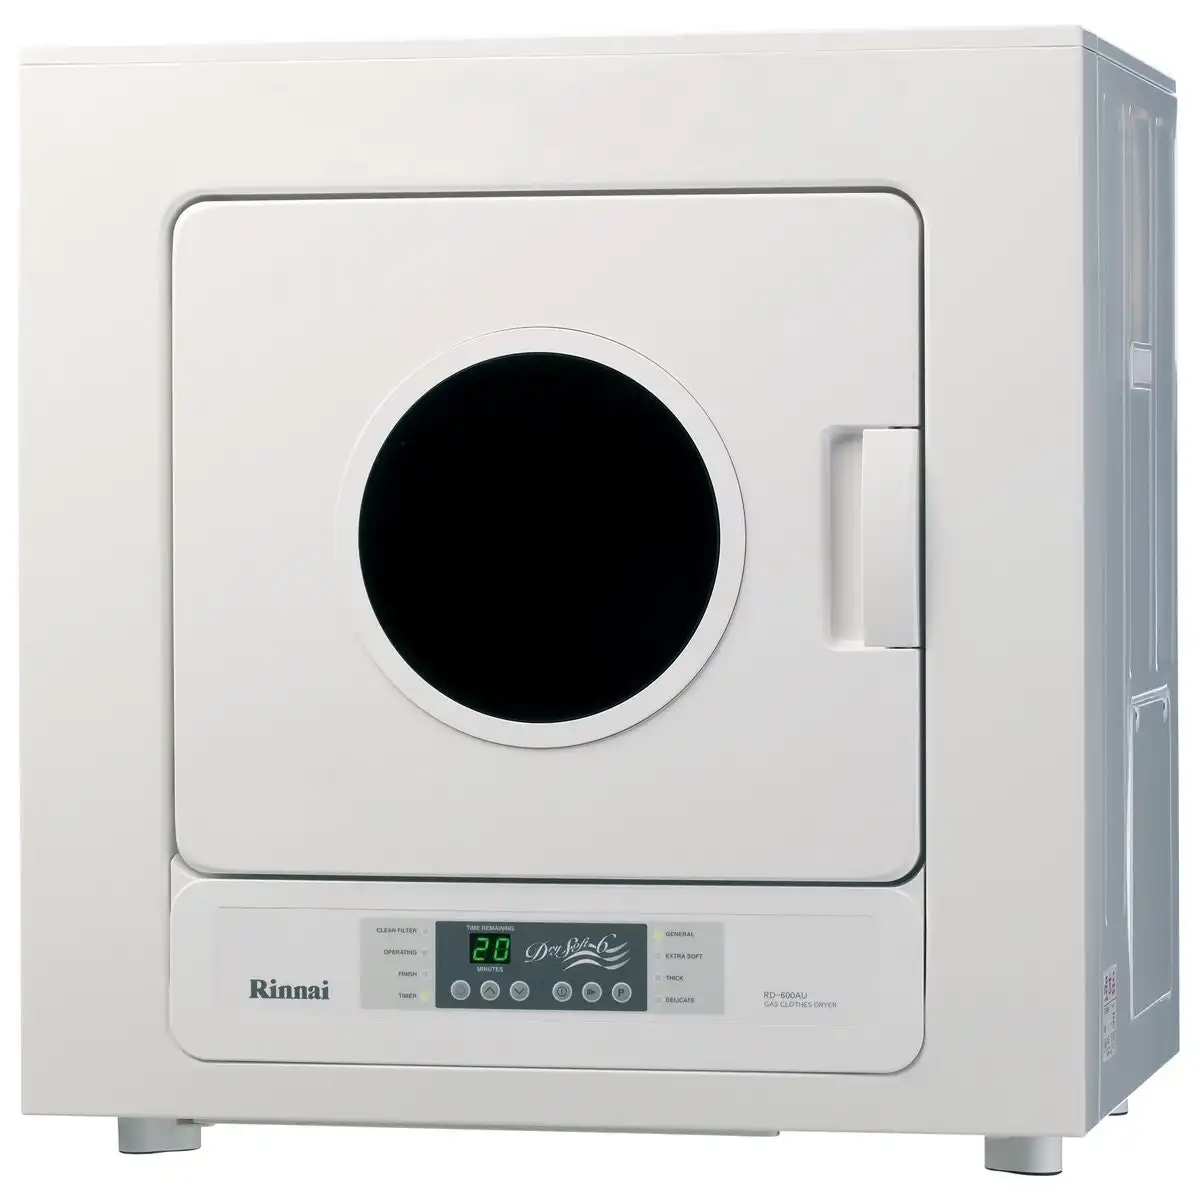 Rinnai 6kg Dry-Soft 6 Natural Gas Dryer